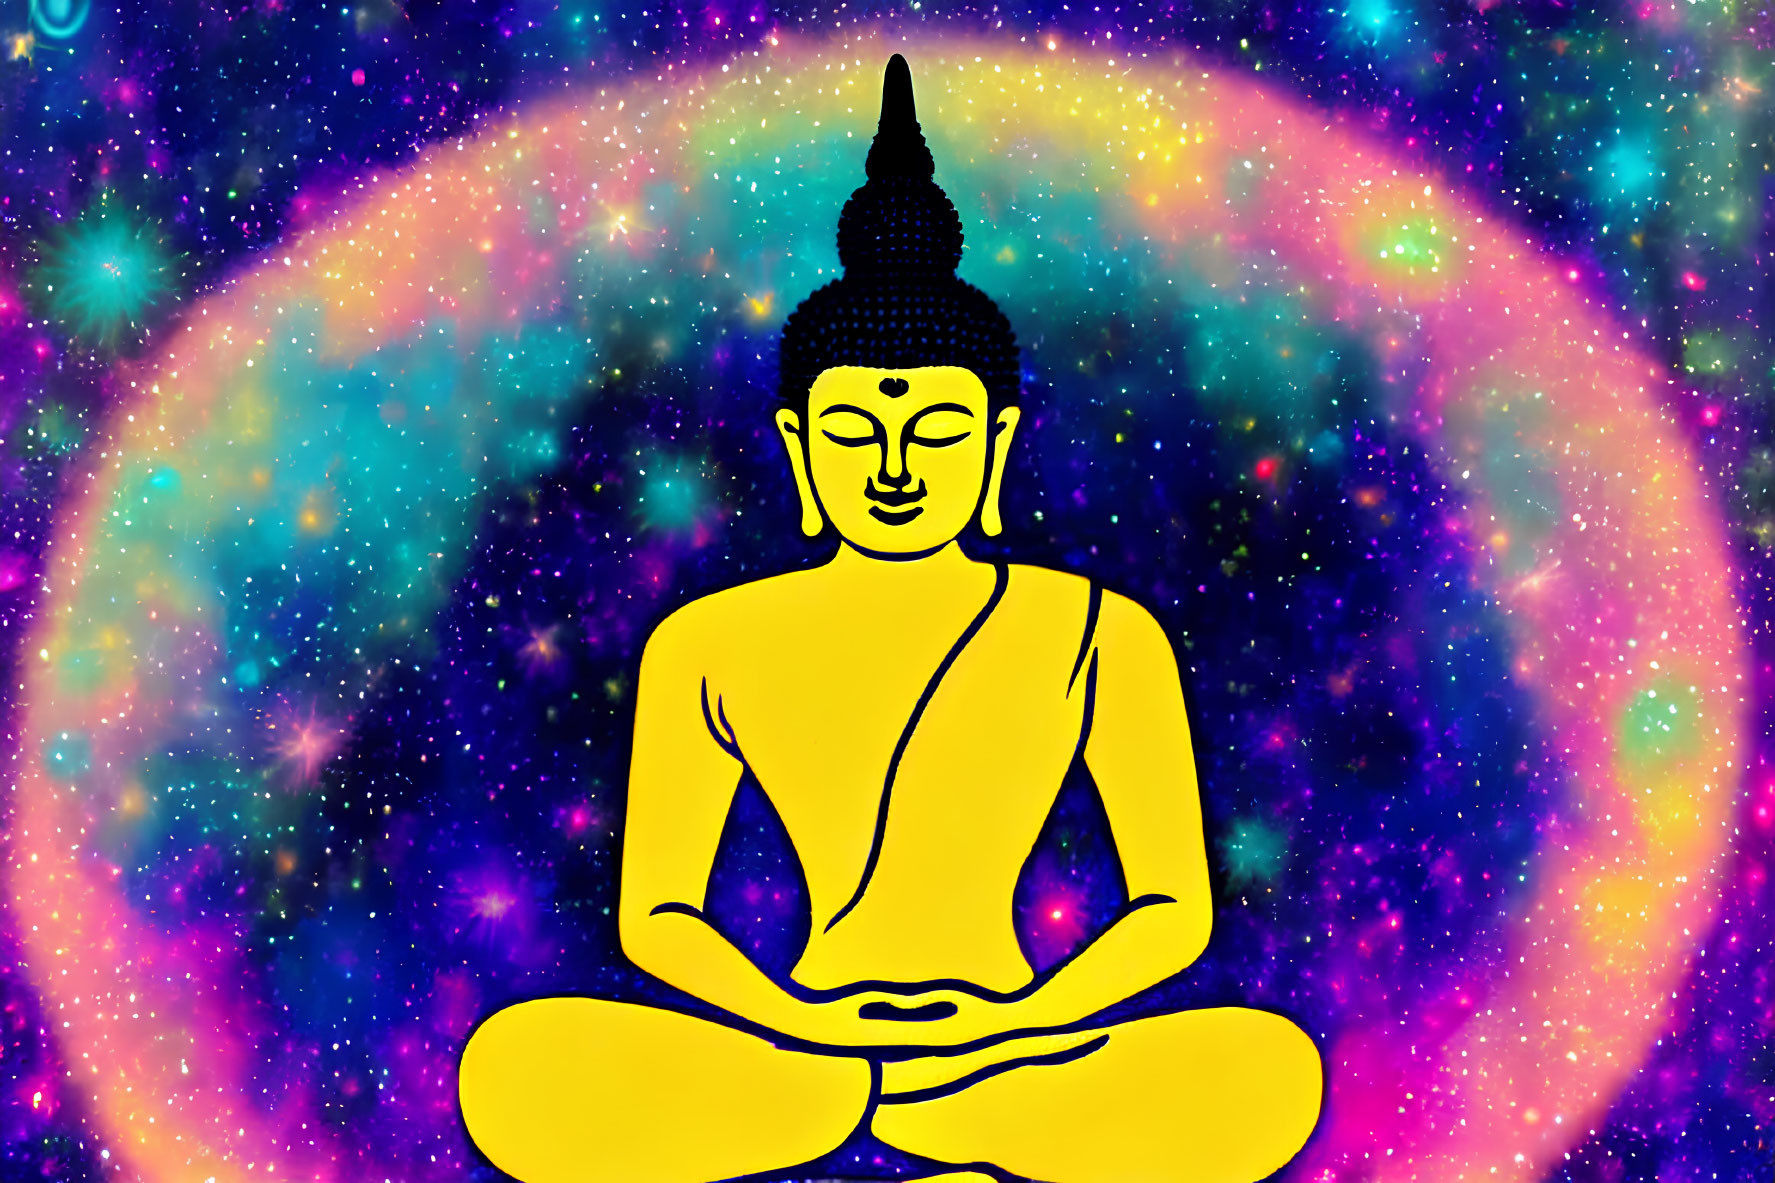 Meditating Buddha Figure with Cosmic Galaxy Background